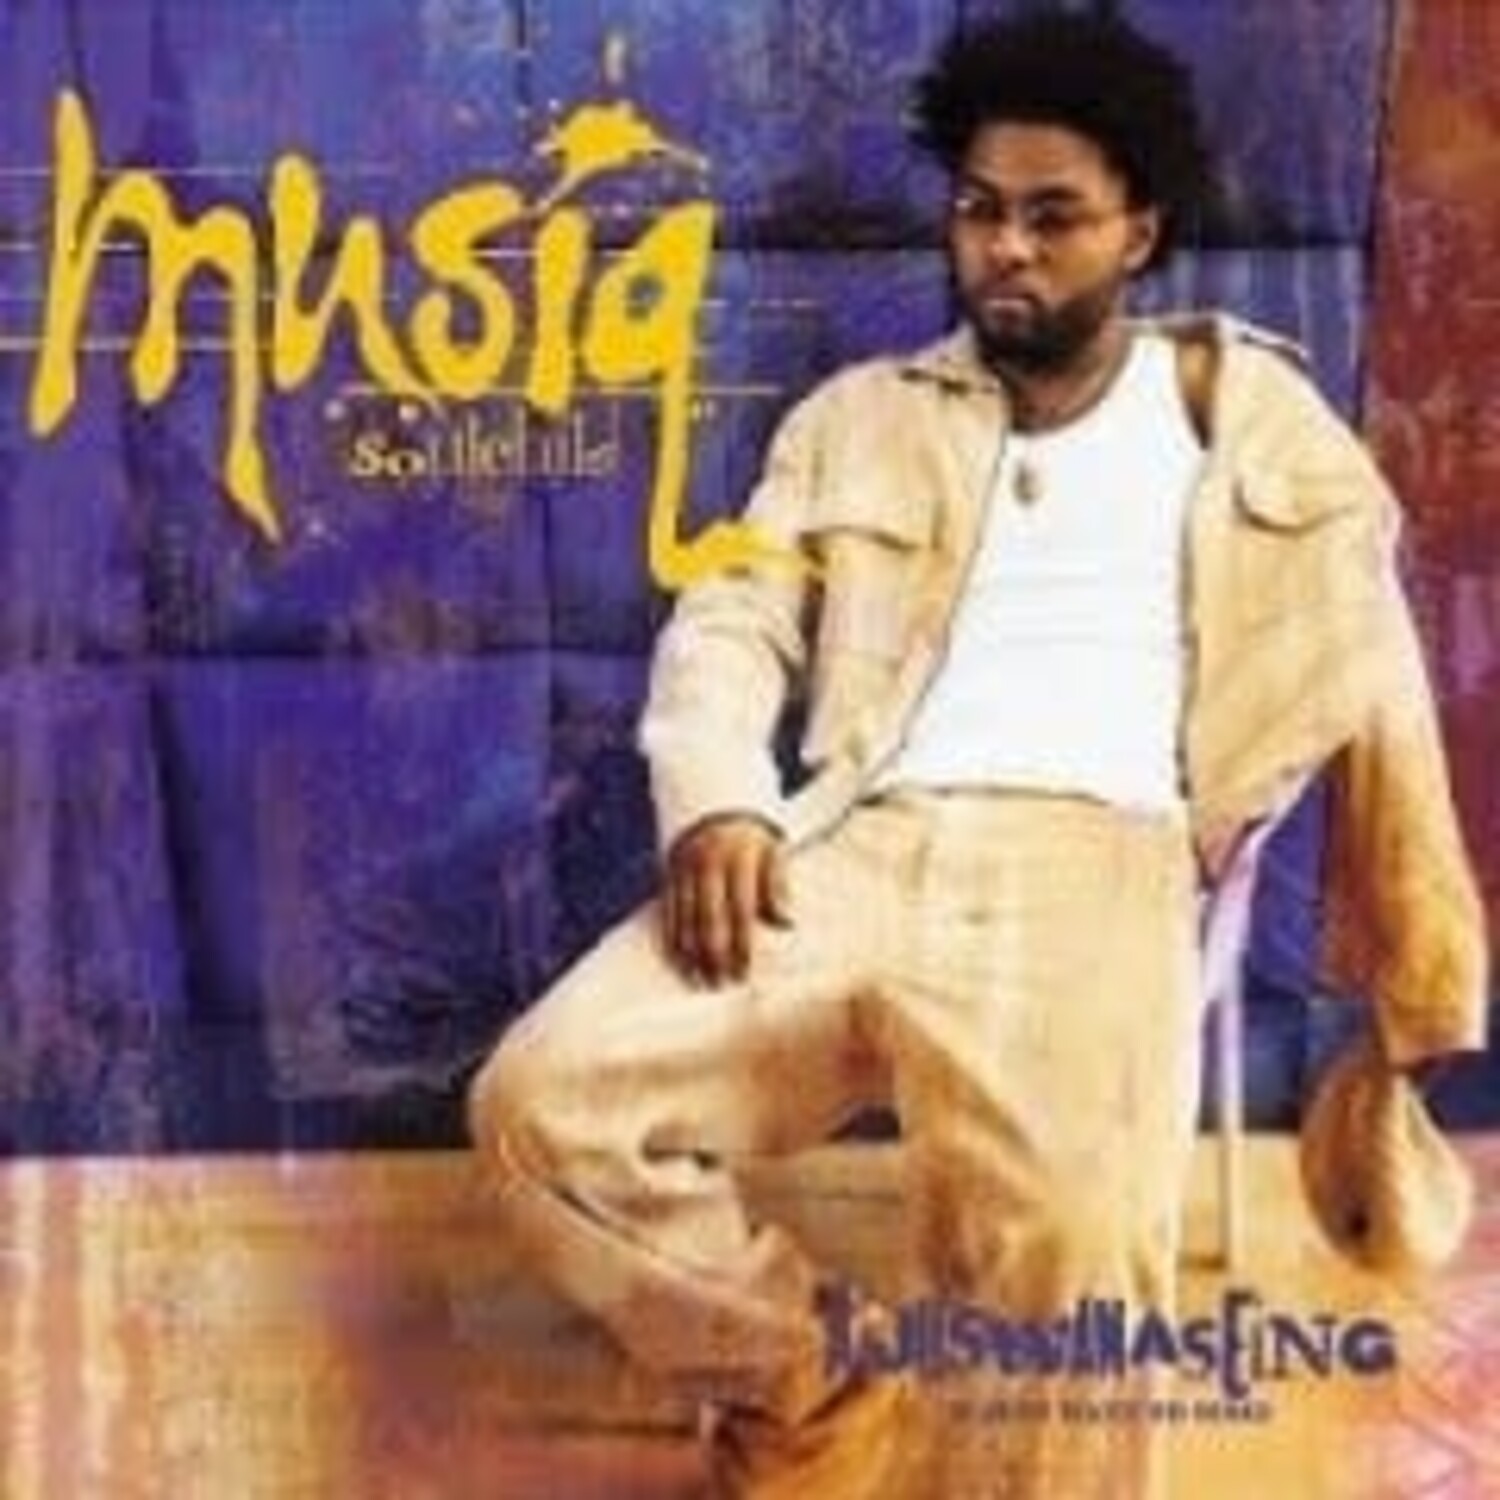 Musiq Soulchild - Aijuswanaseing 2LP (color vinyl) - Wax Trax Records